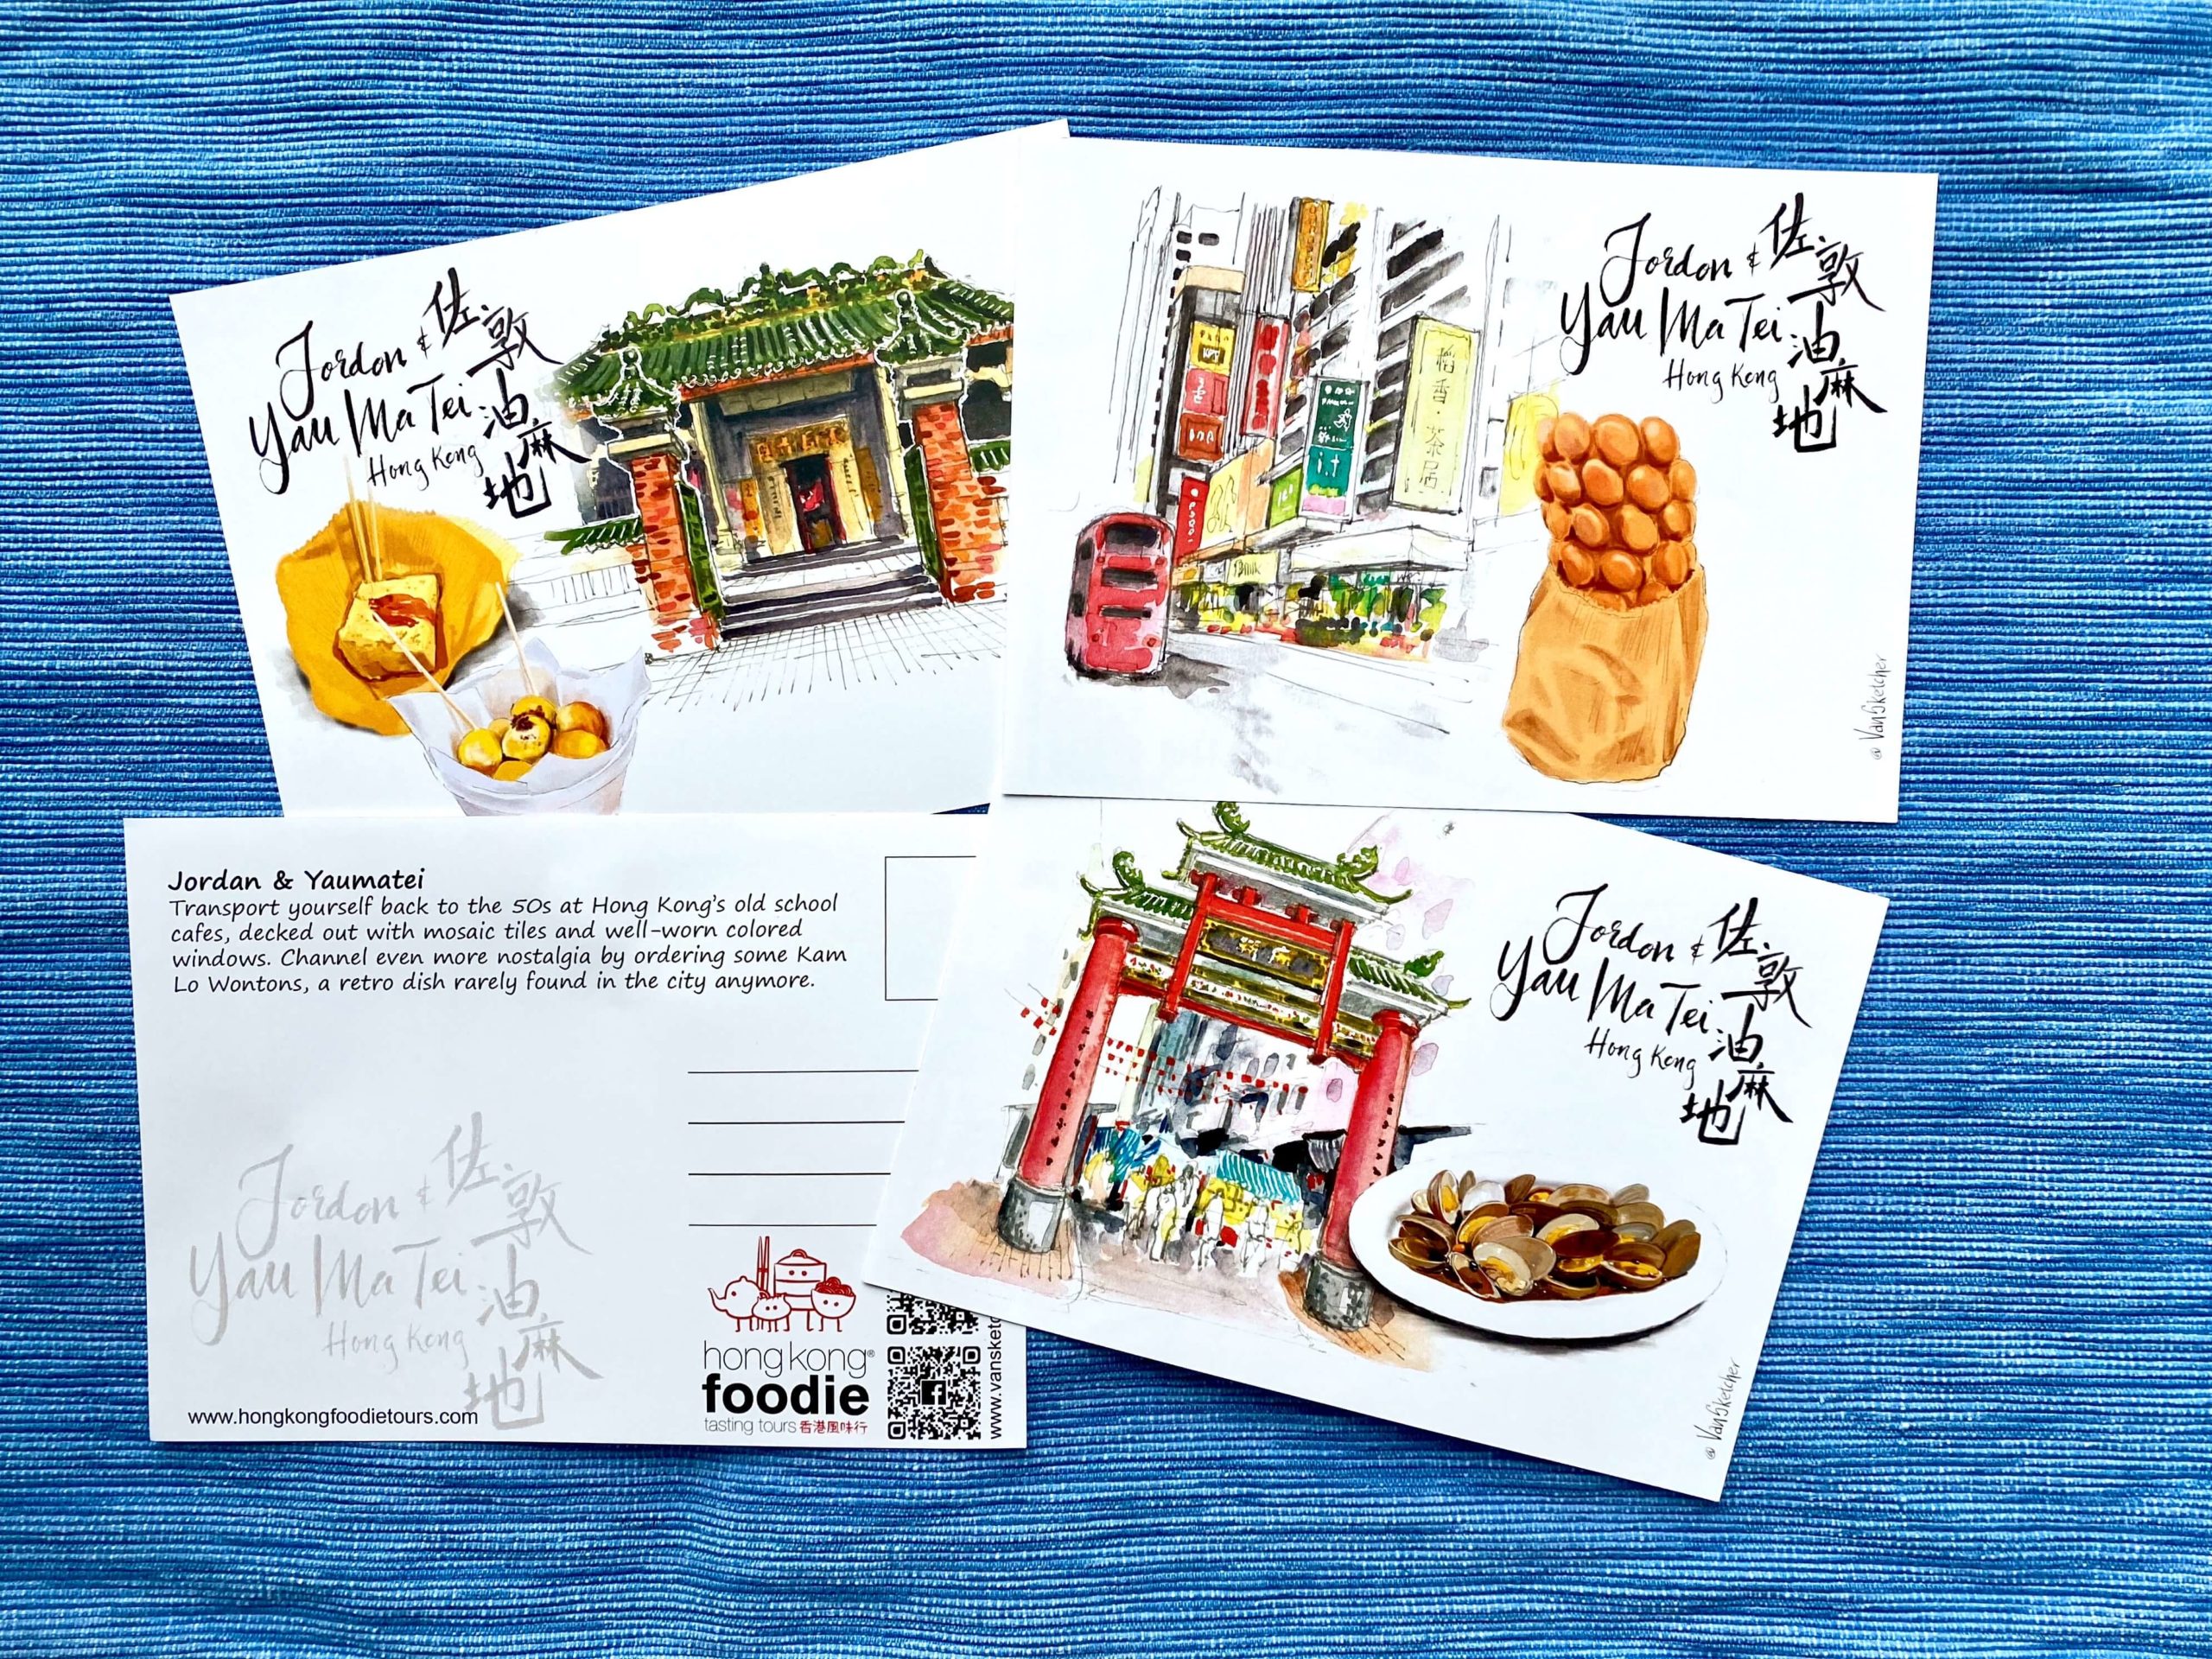 Jordan Yau Ma Tei Foodie Hong Kong Postcards